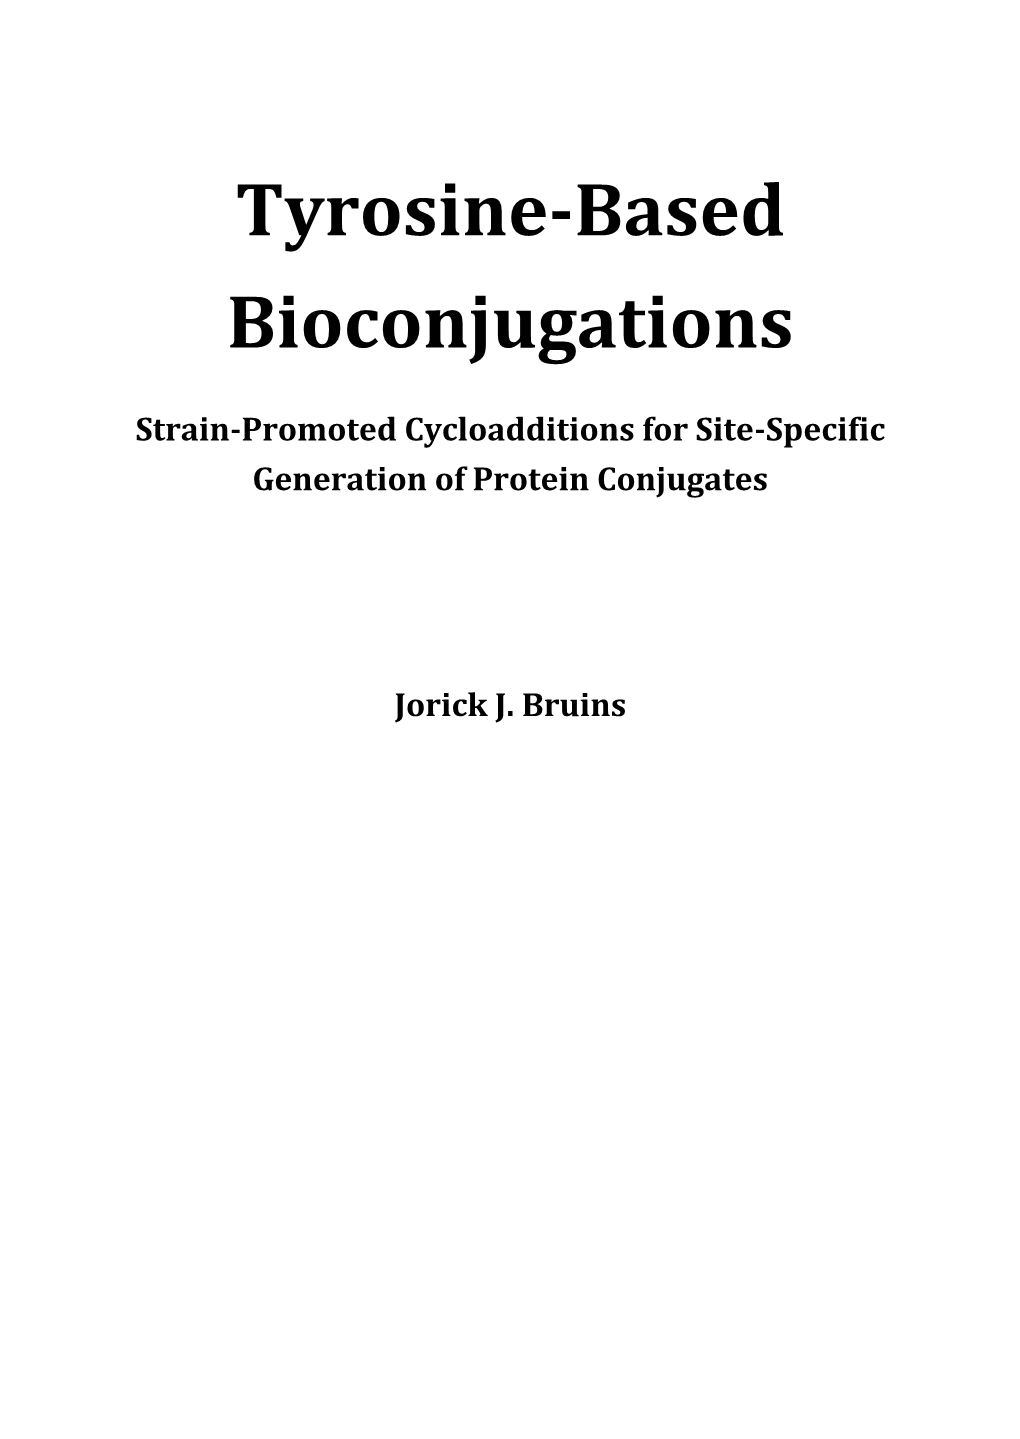 Tyrosine-Based Bioconjugations